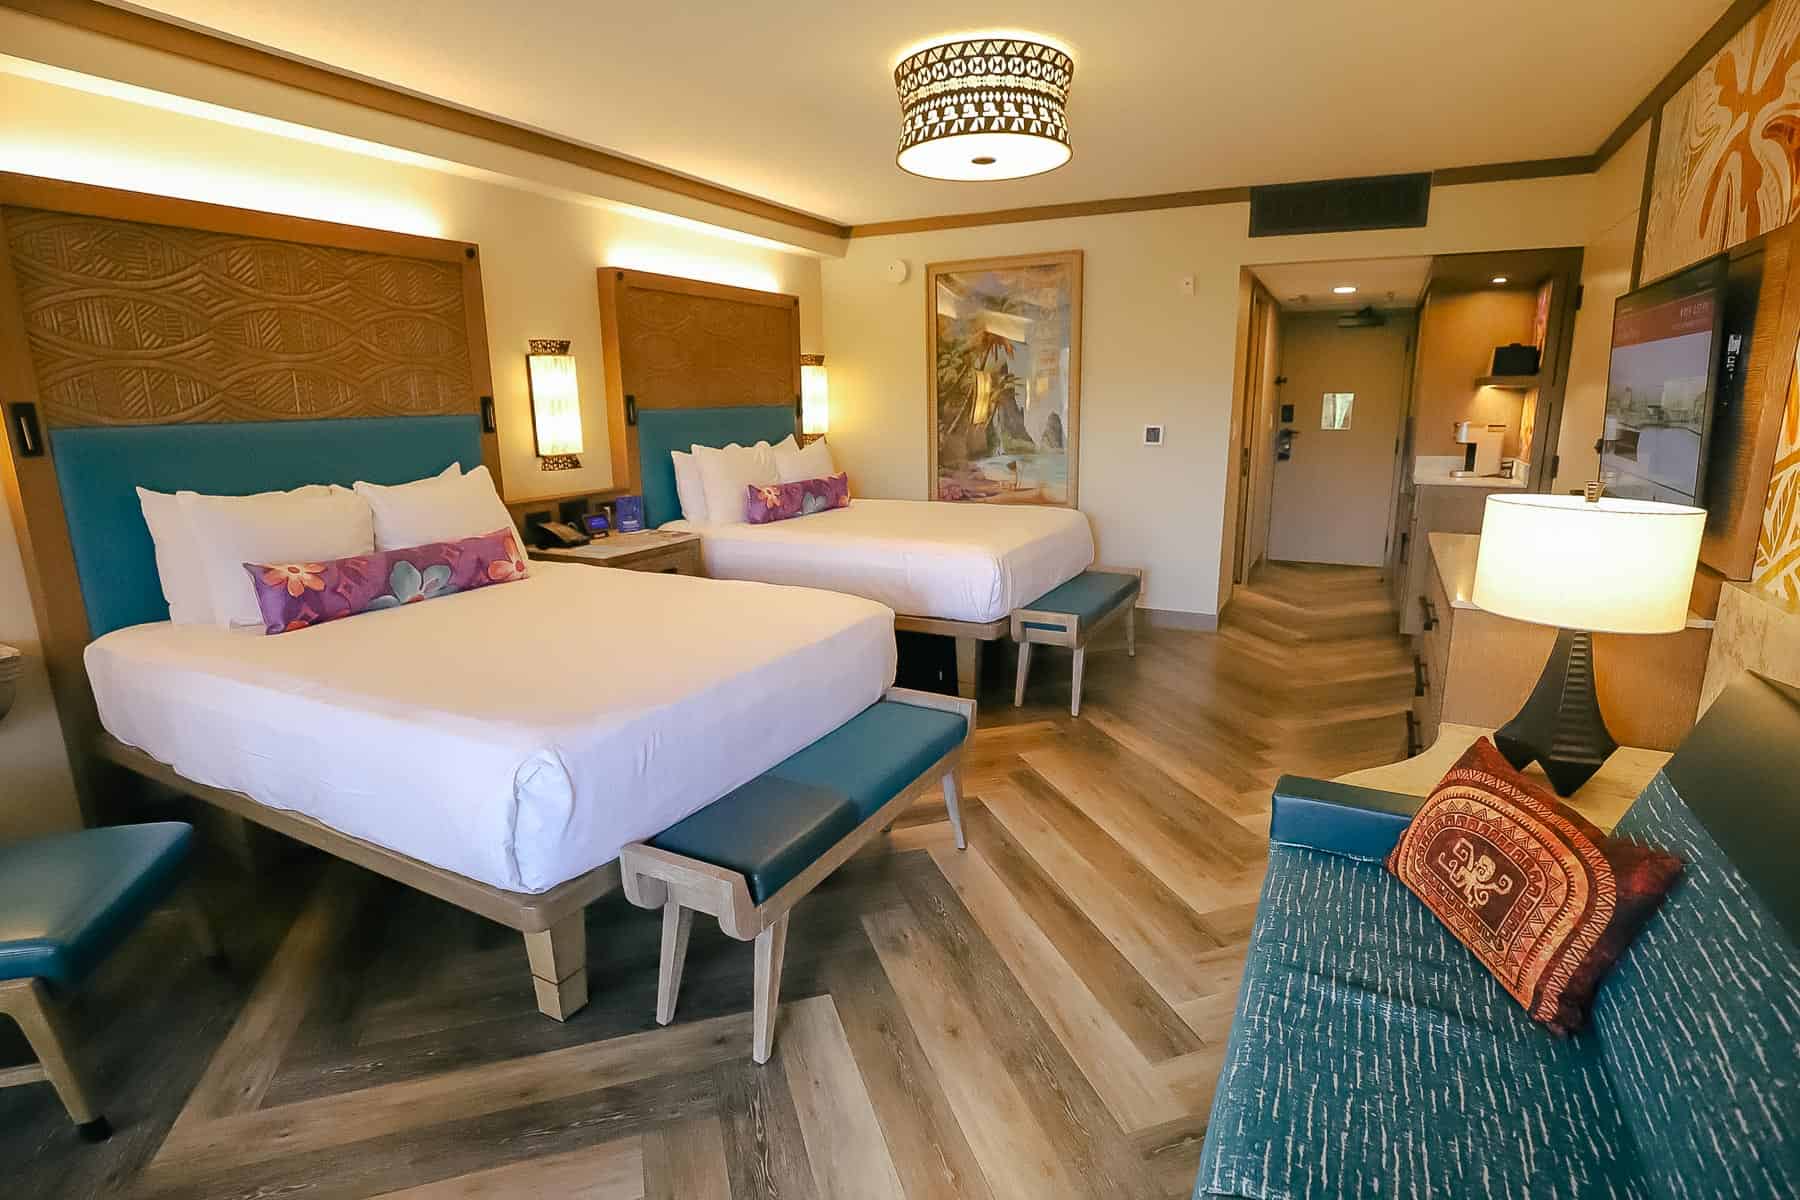 Disney’s Polynesian Resort Room Photos and Tour (The Moana Rooms)